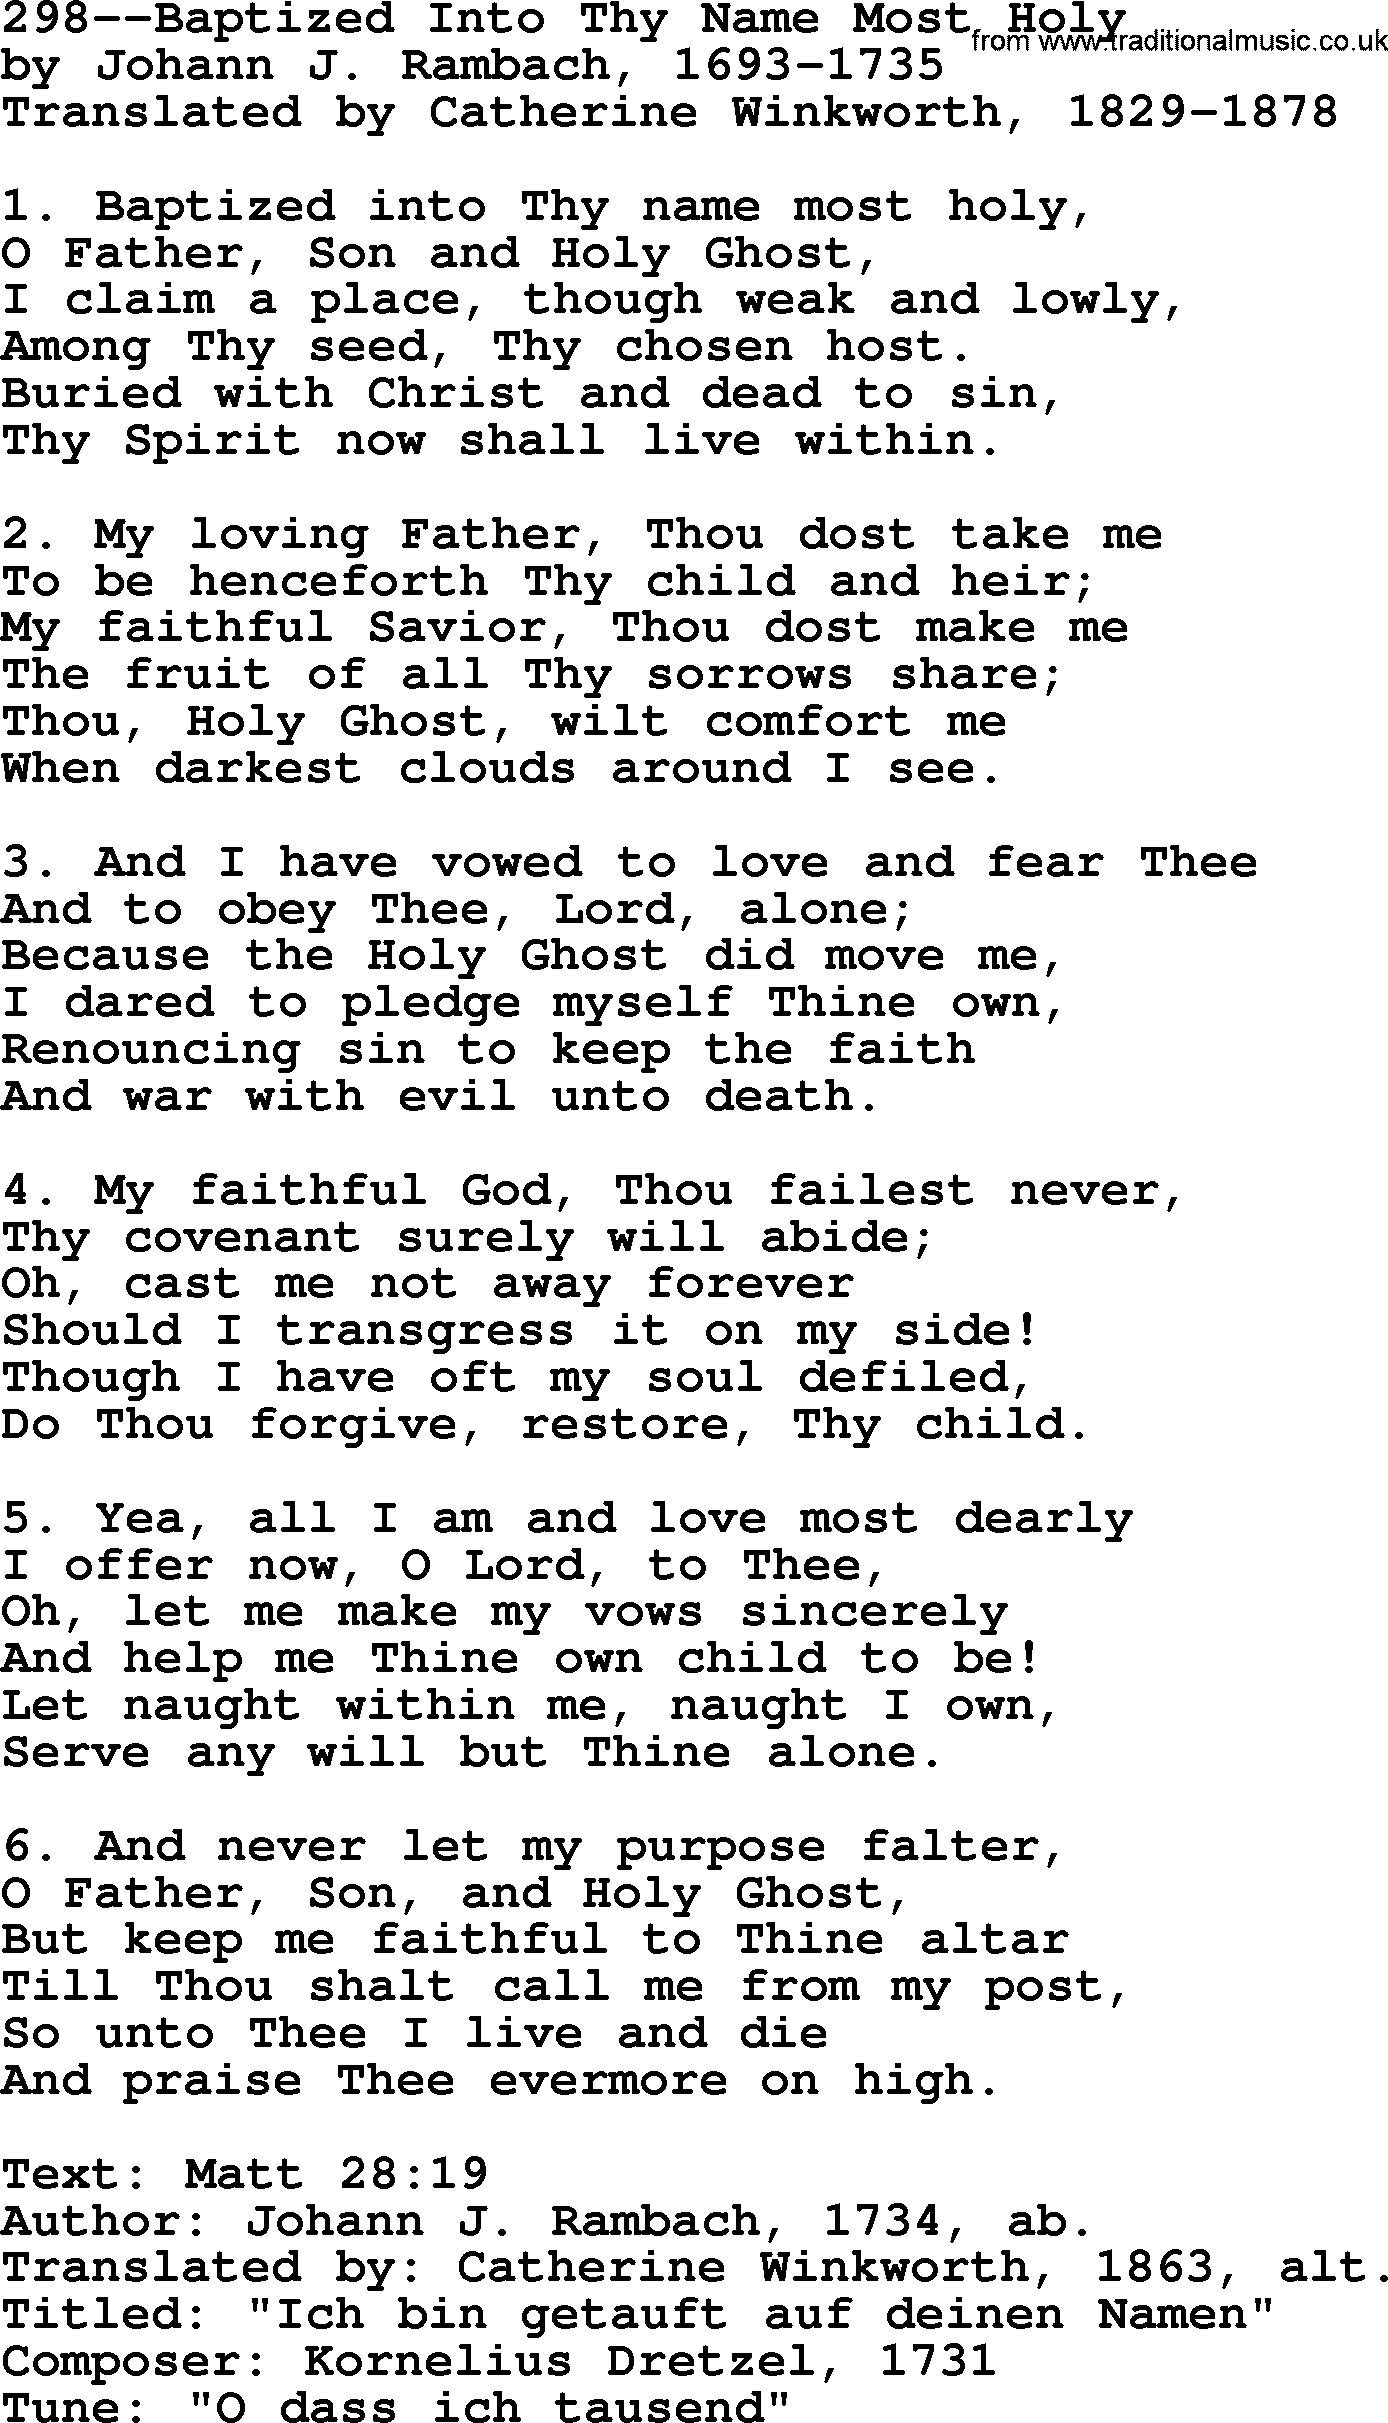 Lutheran Hymn: 298--Baptized Into Thy Name Most Holy.txt lyrics with PDF